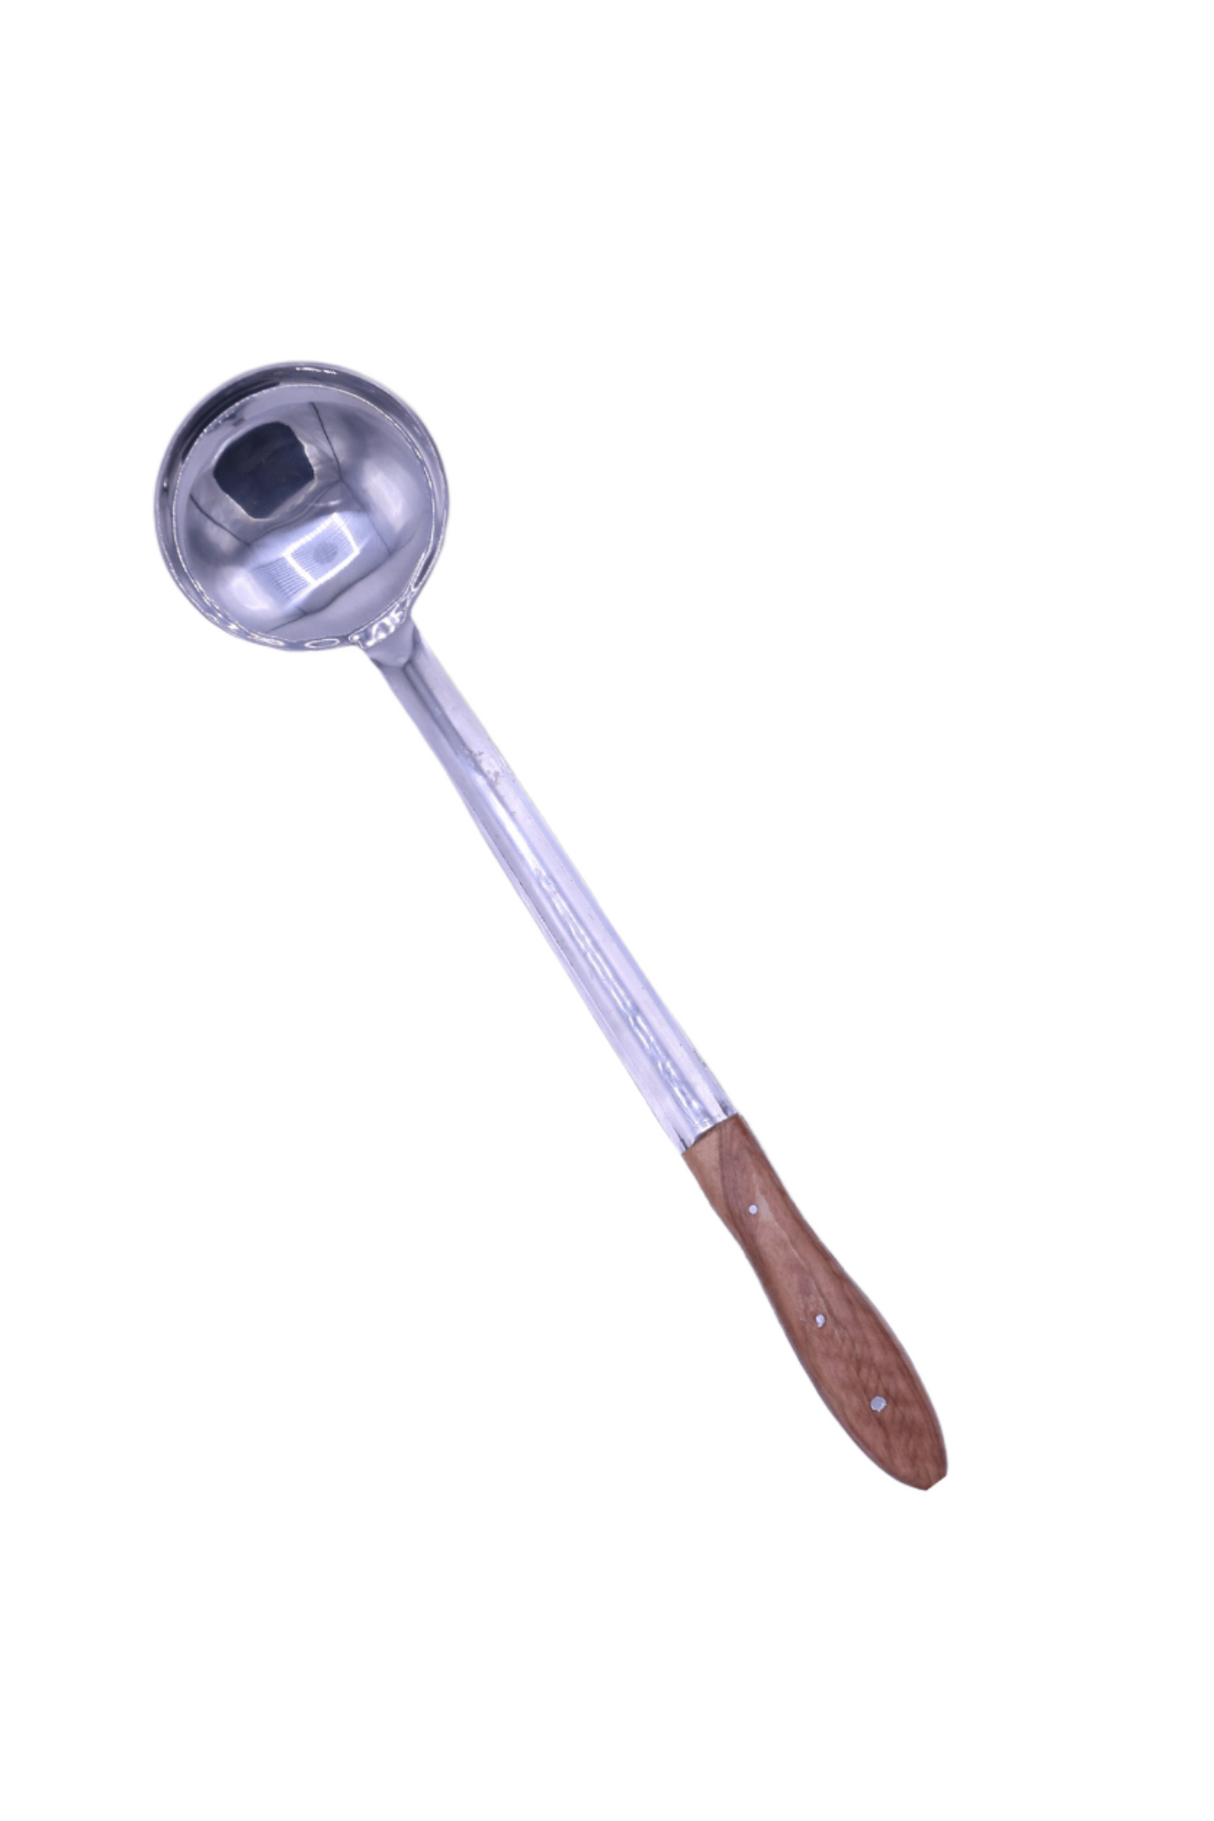 ss broth spoon wood handle 16''